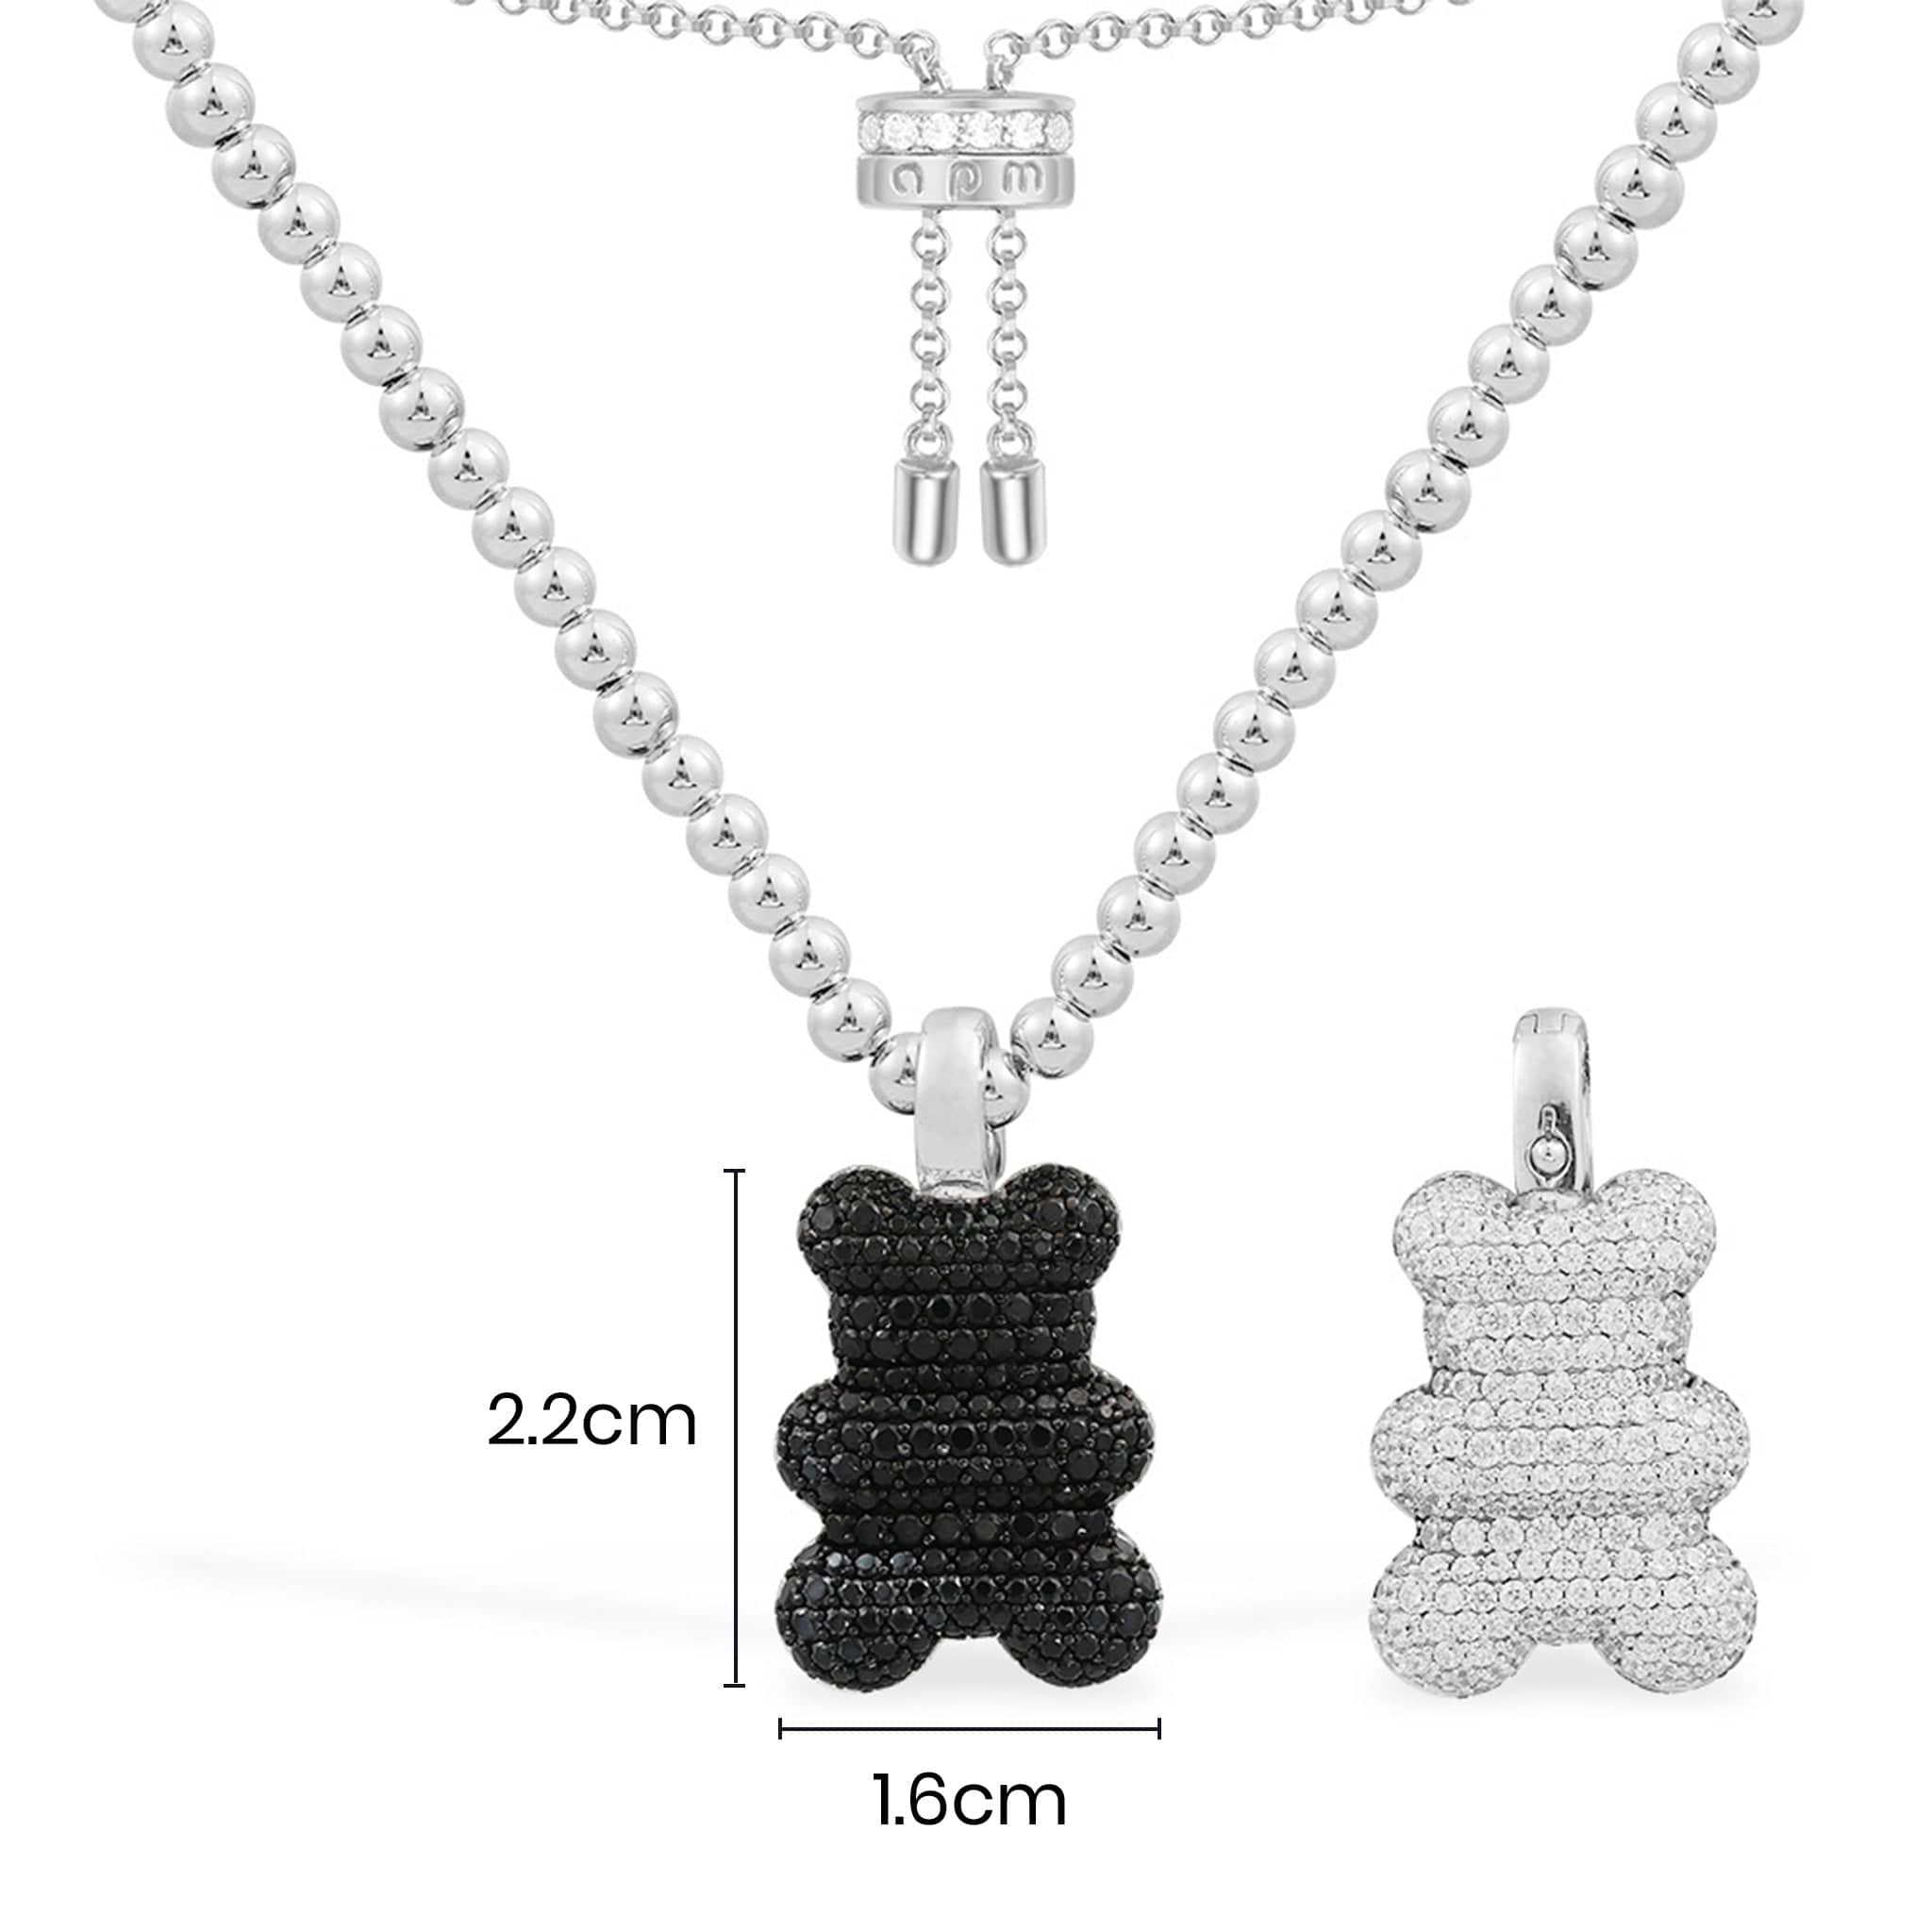 Mood Yummy Bear Adjustable Necklace with Beads - APM Monaco